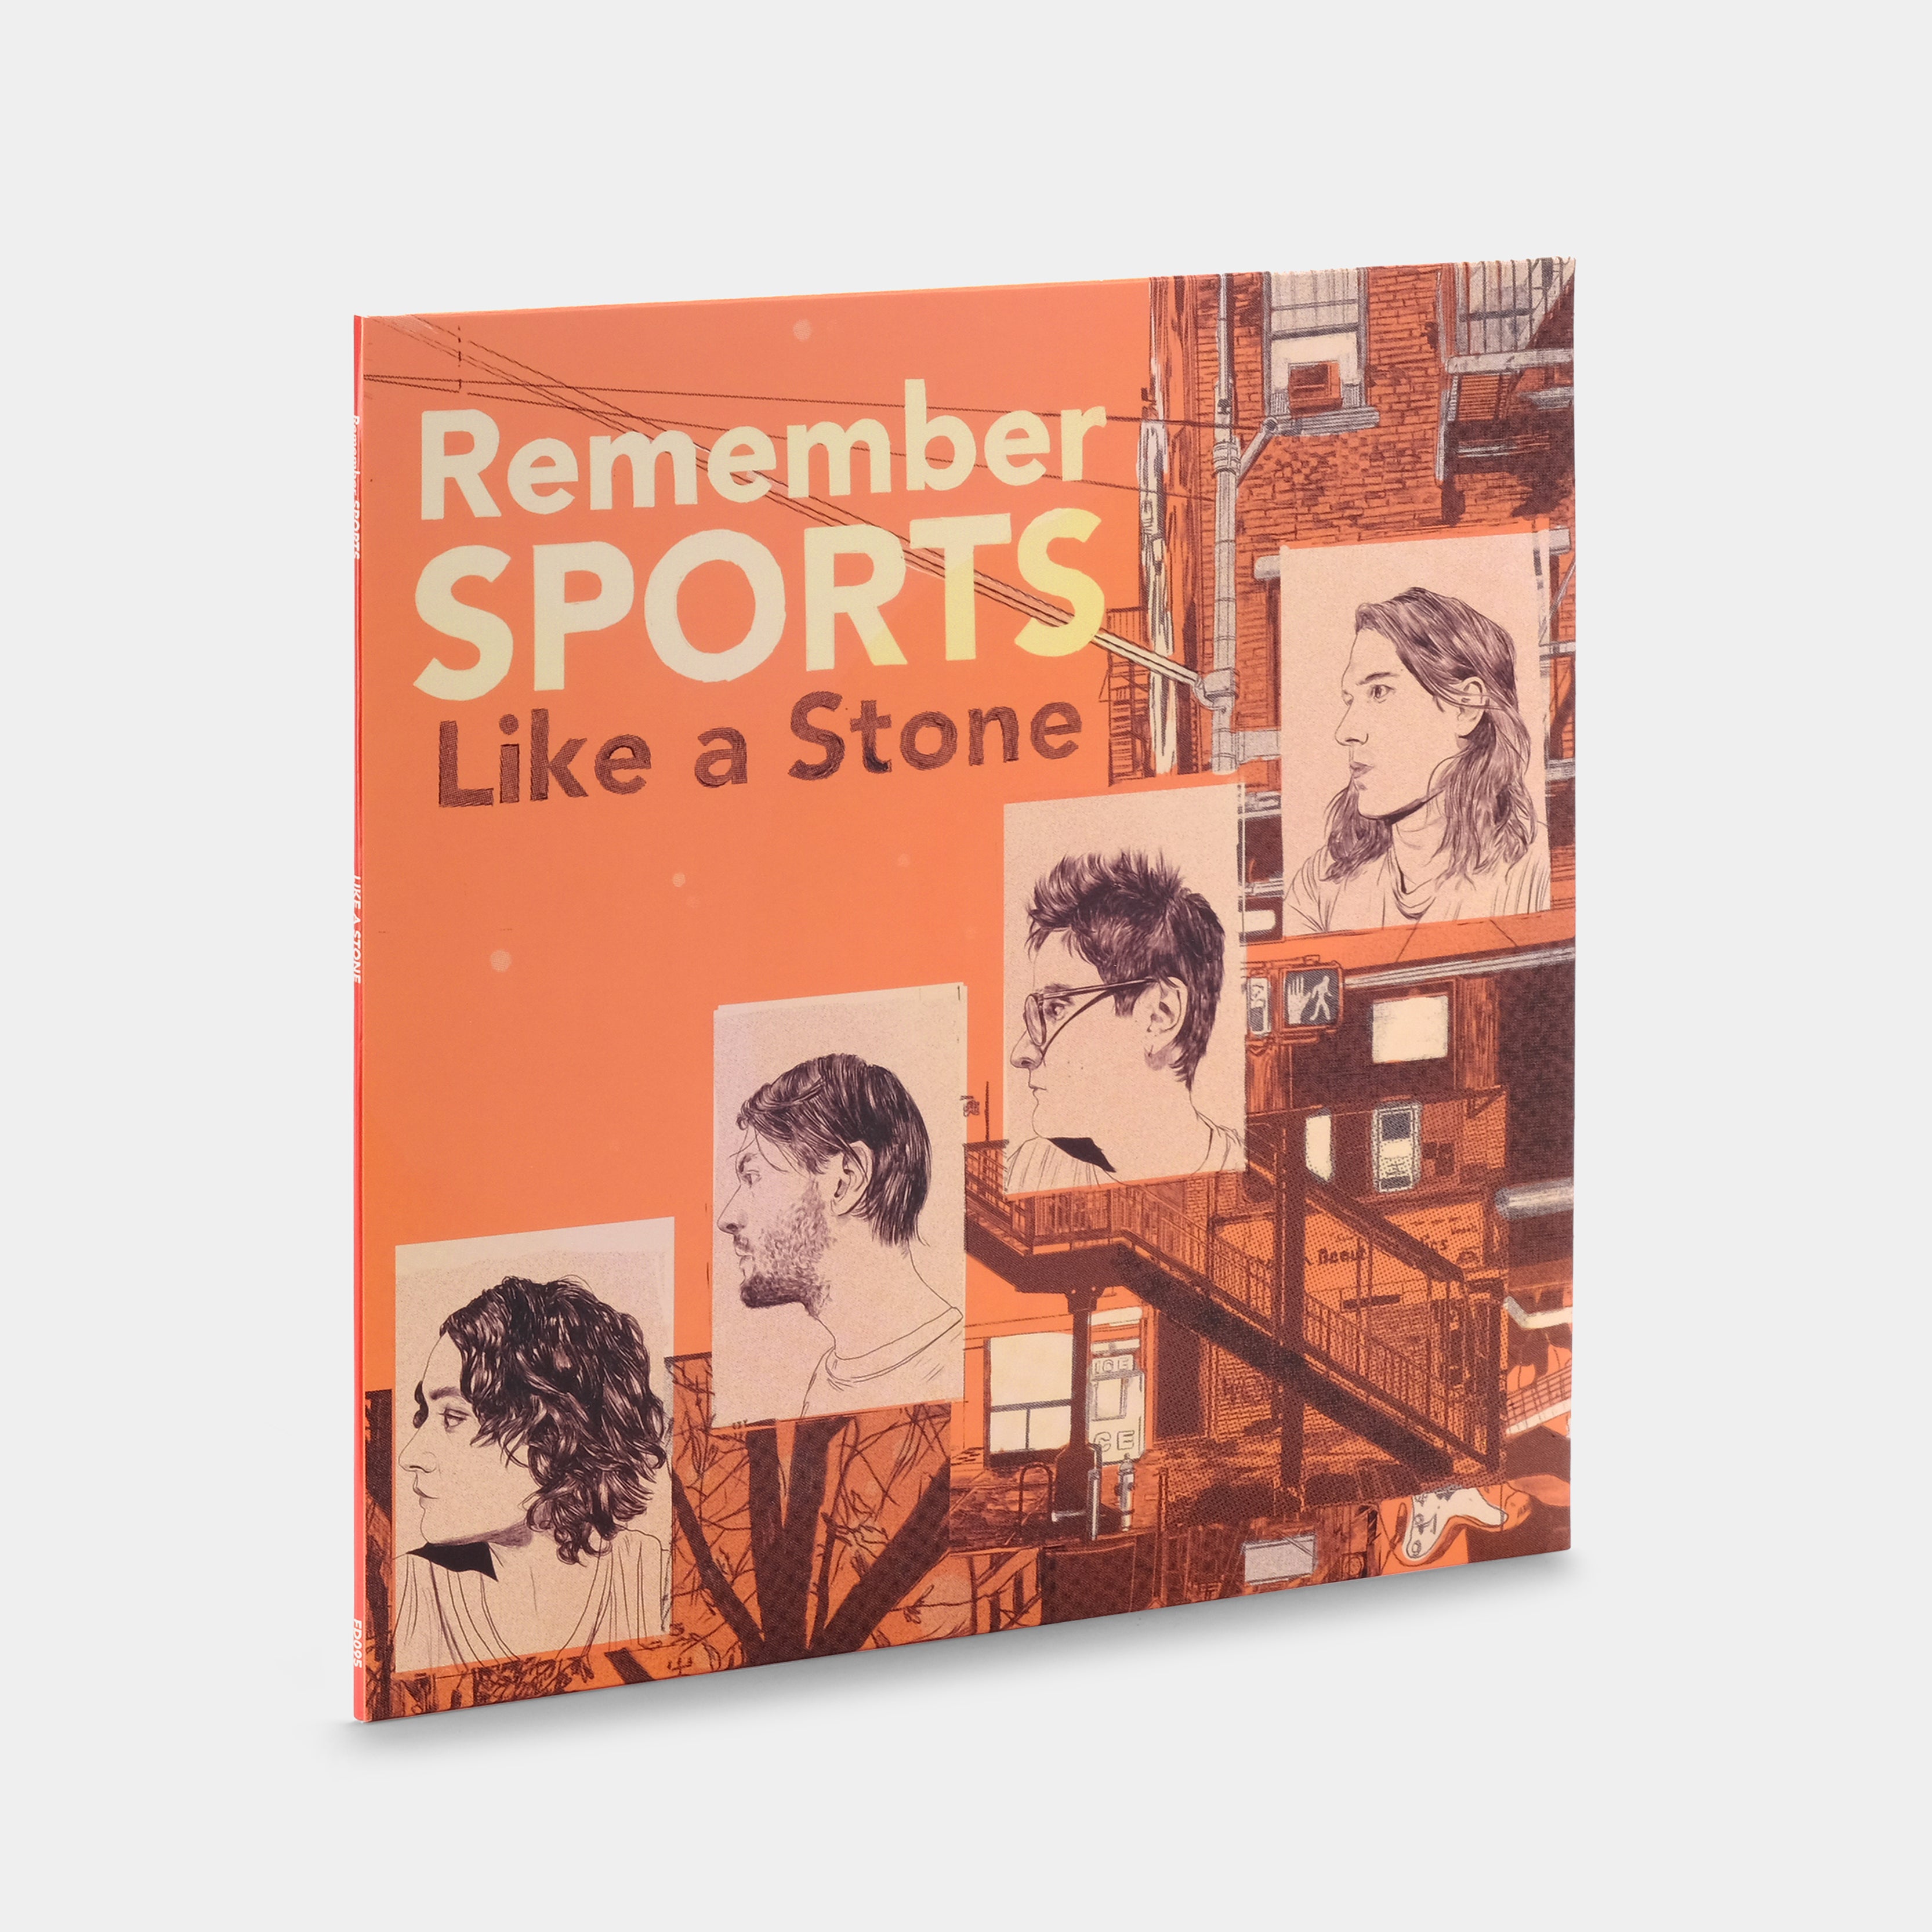 Remember Sports - Like a Stone LP Eco Mix Vinyl Record